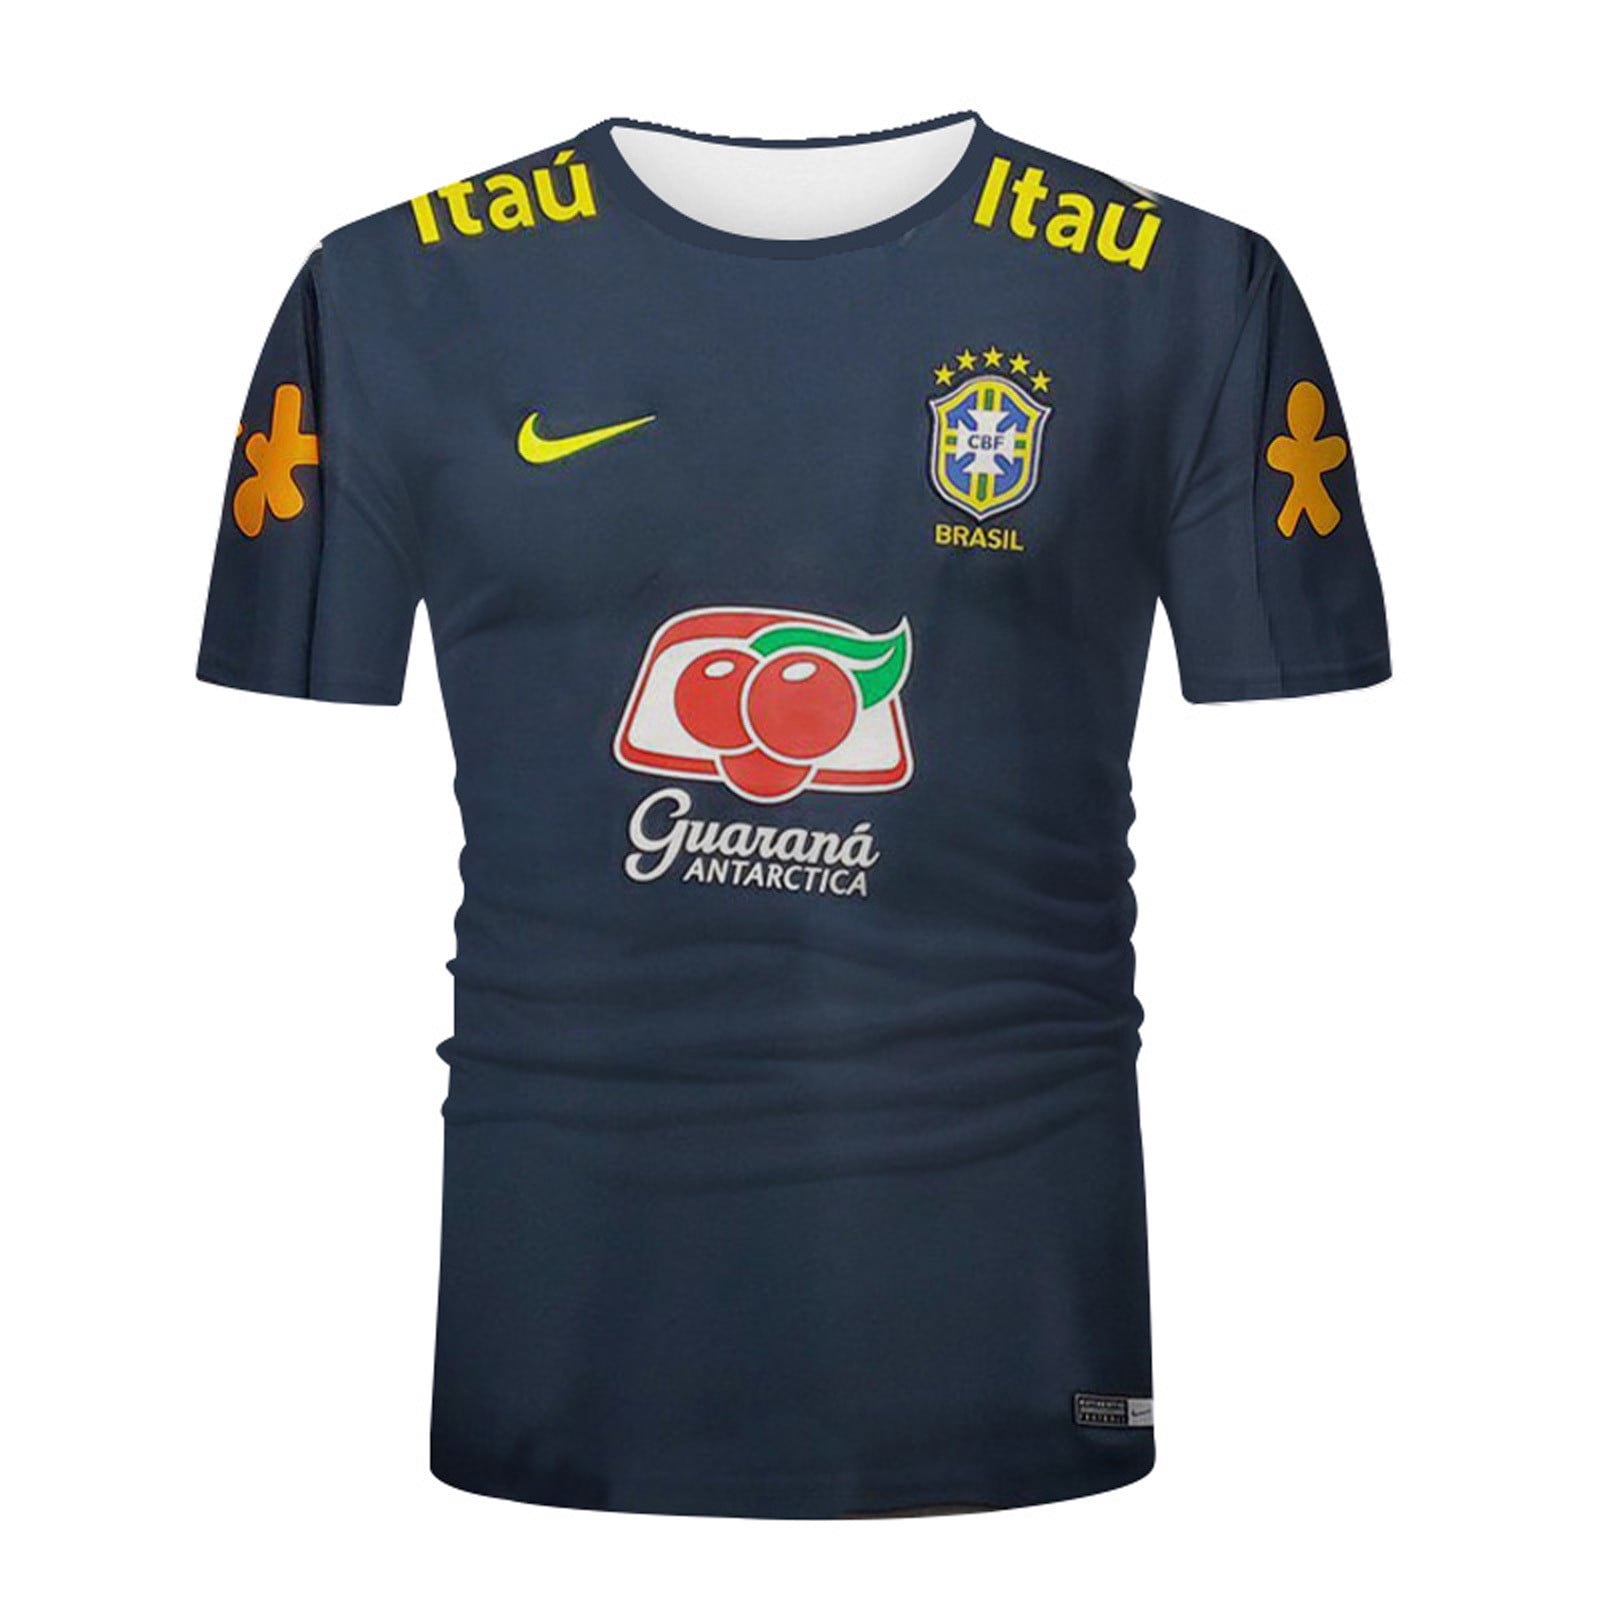 Diahey 2021 Brasil Training Wear American Football T-Shirt Homem